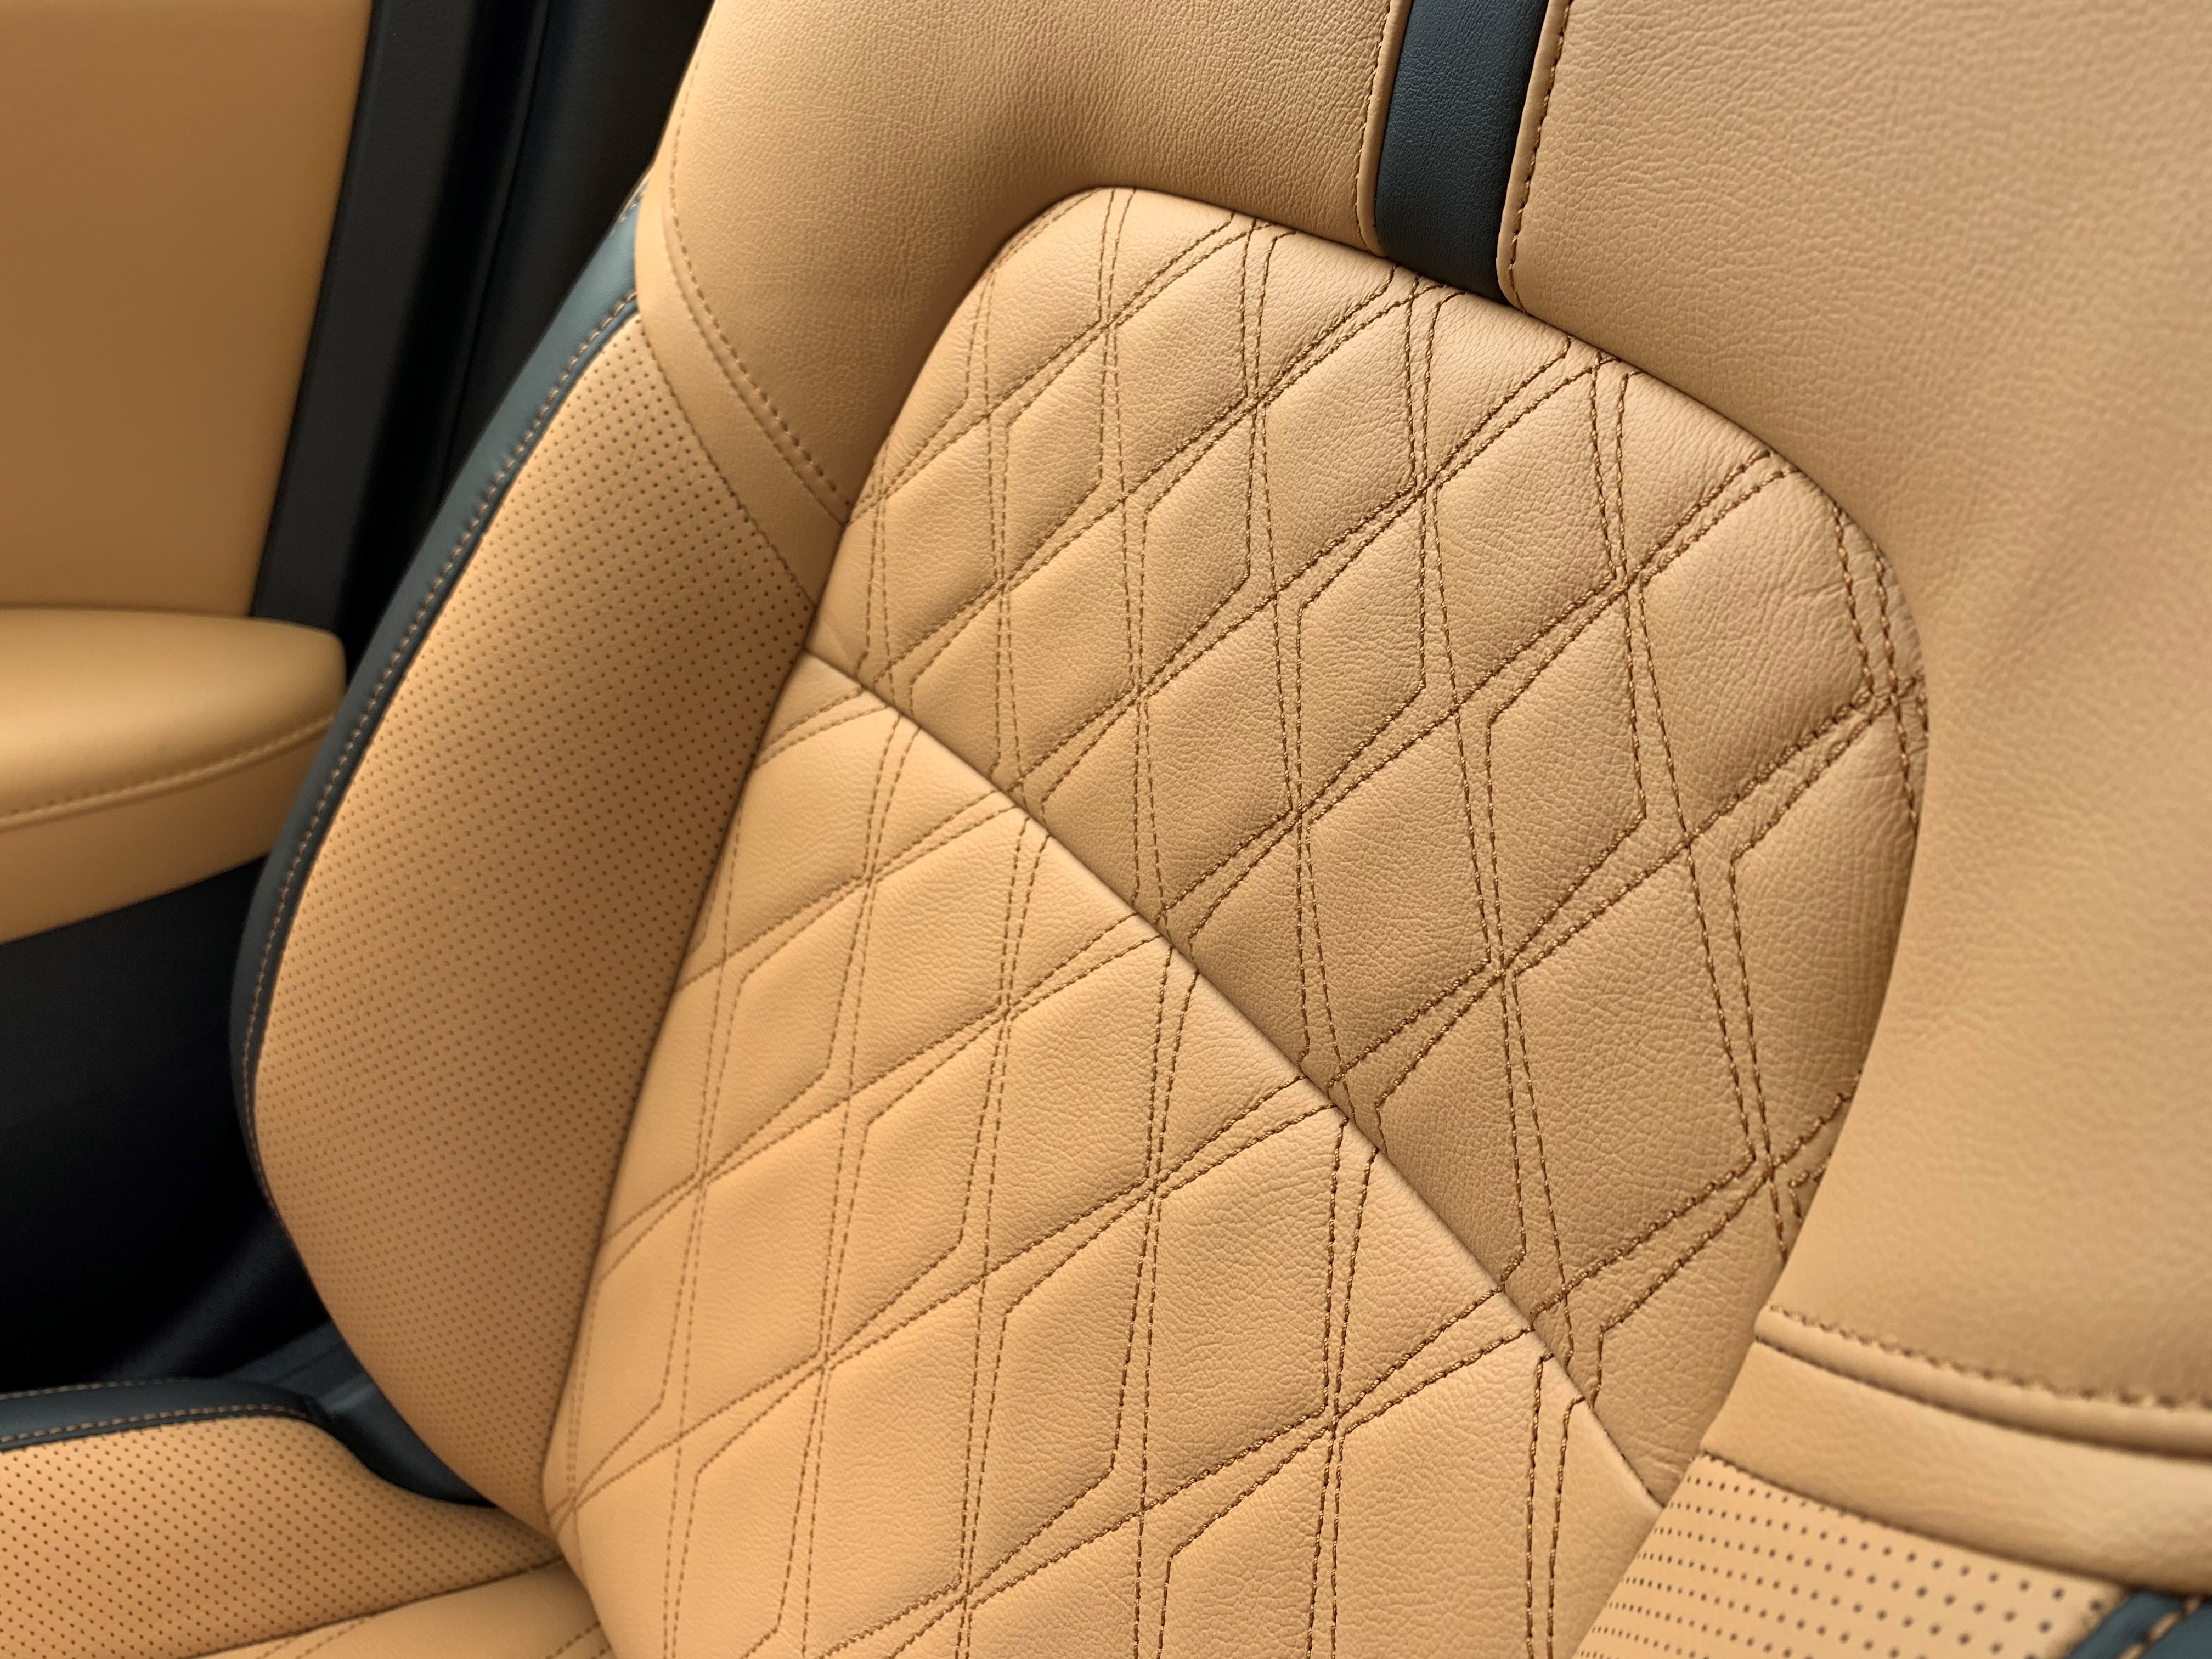 EMBED 2 Nissan Sentra seat closeup.jpg